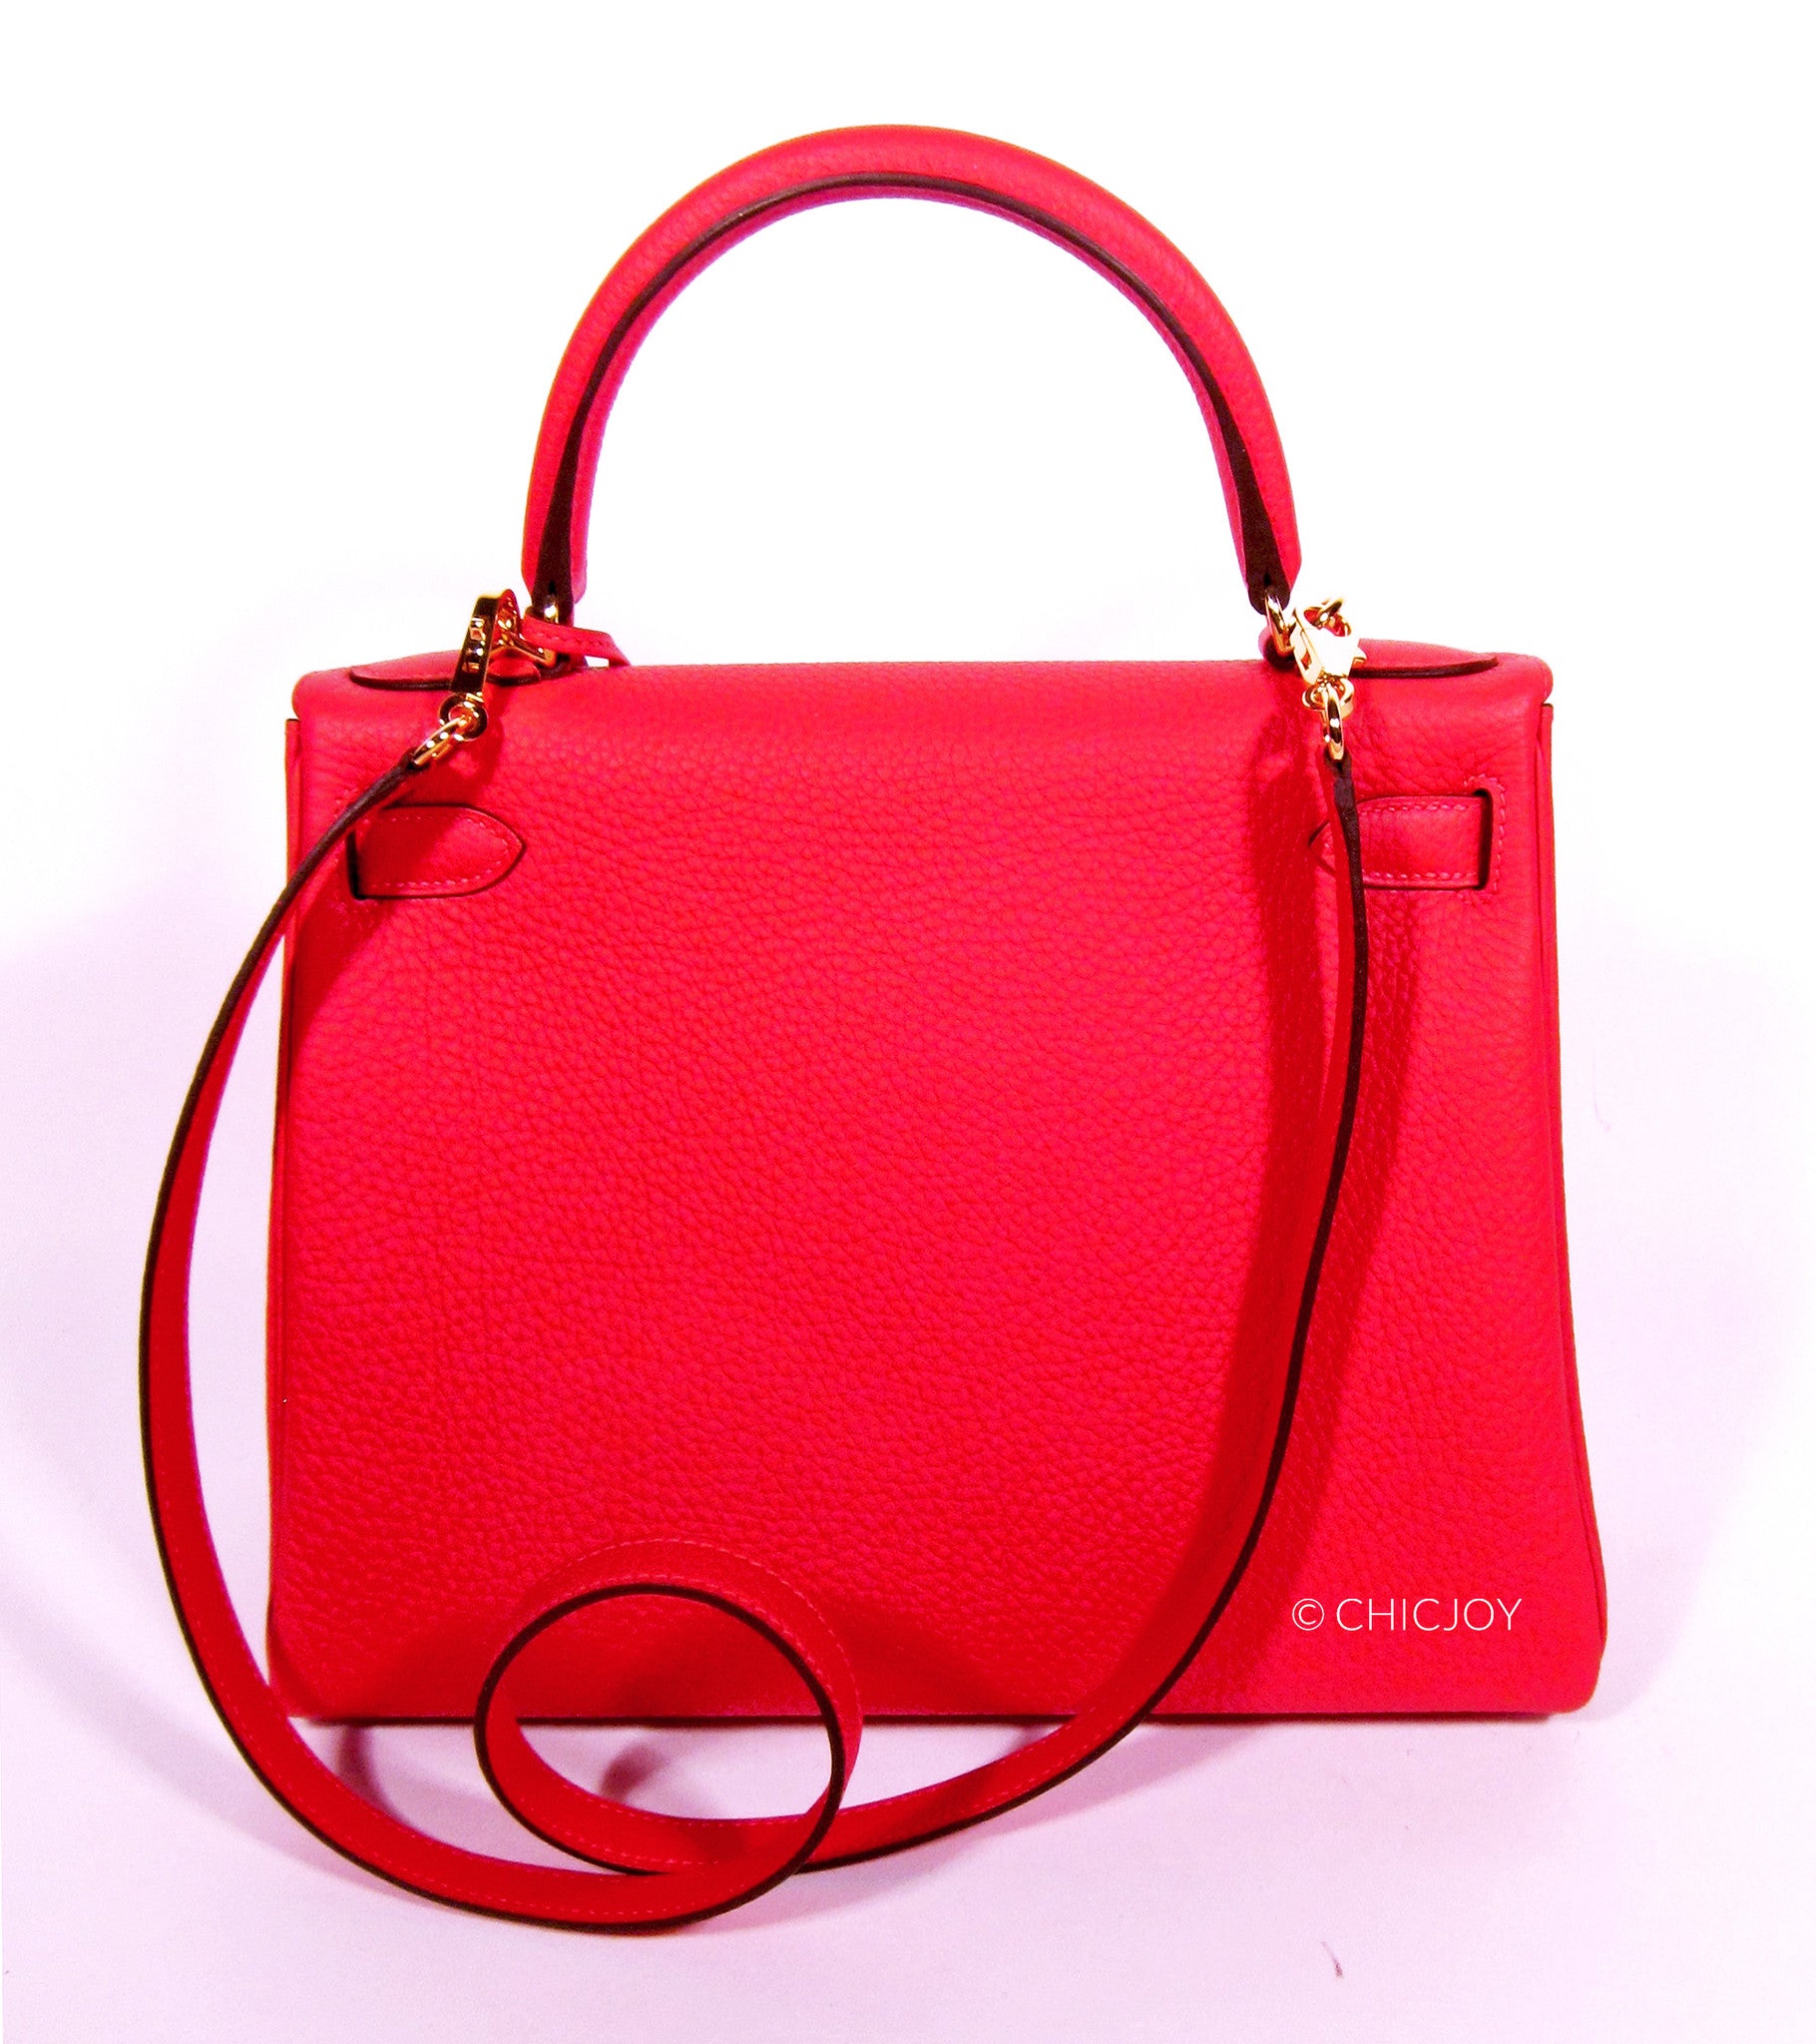 Hermes Kelly Handbag Rouge Pivoine Togo with Palladium Hardware 28